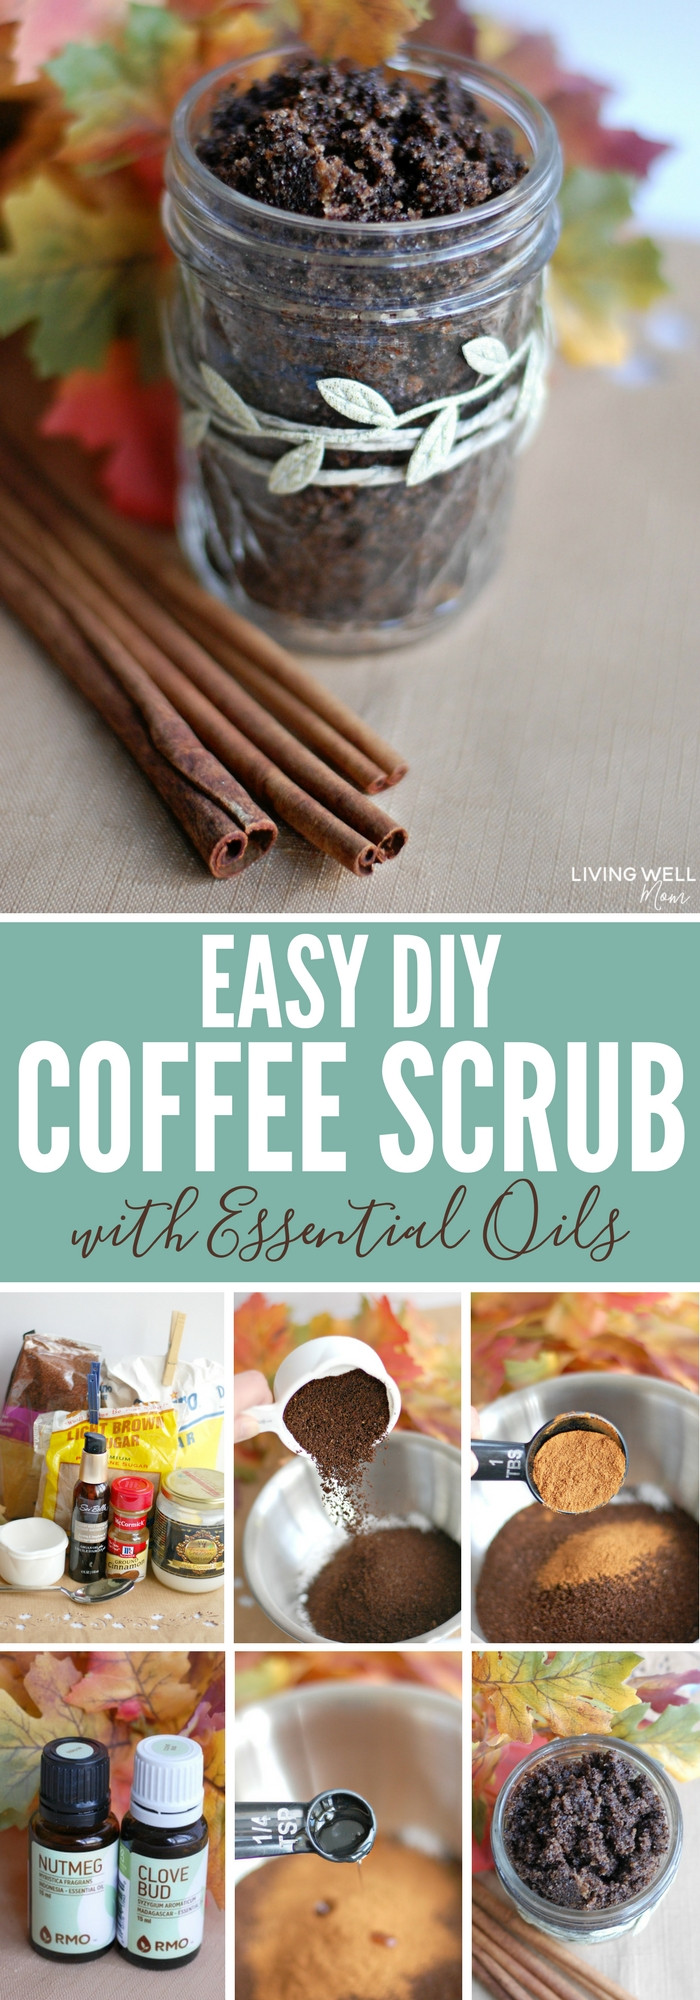 Best ideas about DIY Coffee Scrub
. Save or Pin Easy DIY Coffee Scrub with Essential Oils Now.